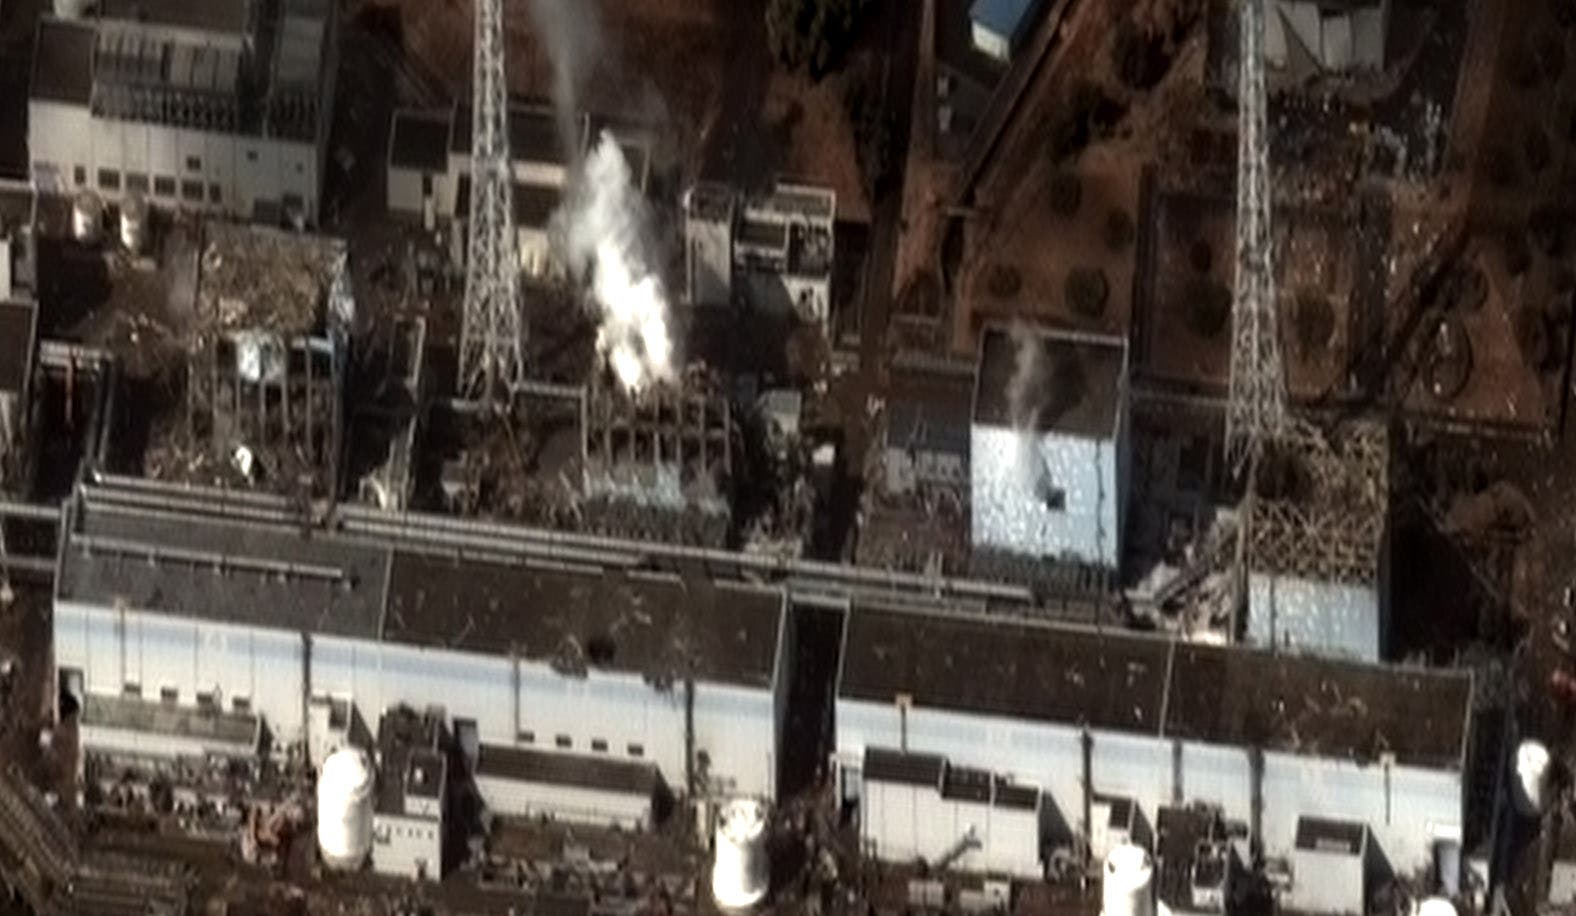 Reaktorblöcke des Kernkraftwerks Fukushima nach der Katastrophe.